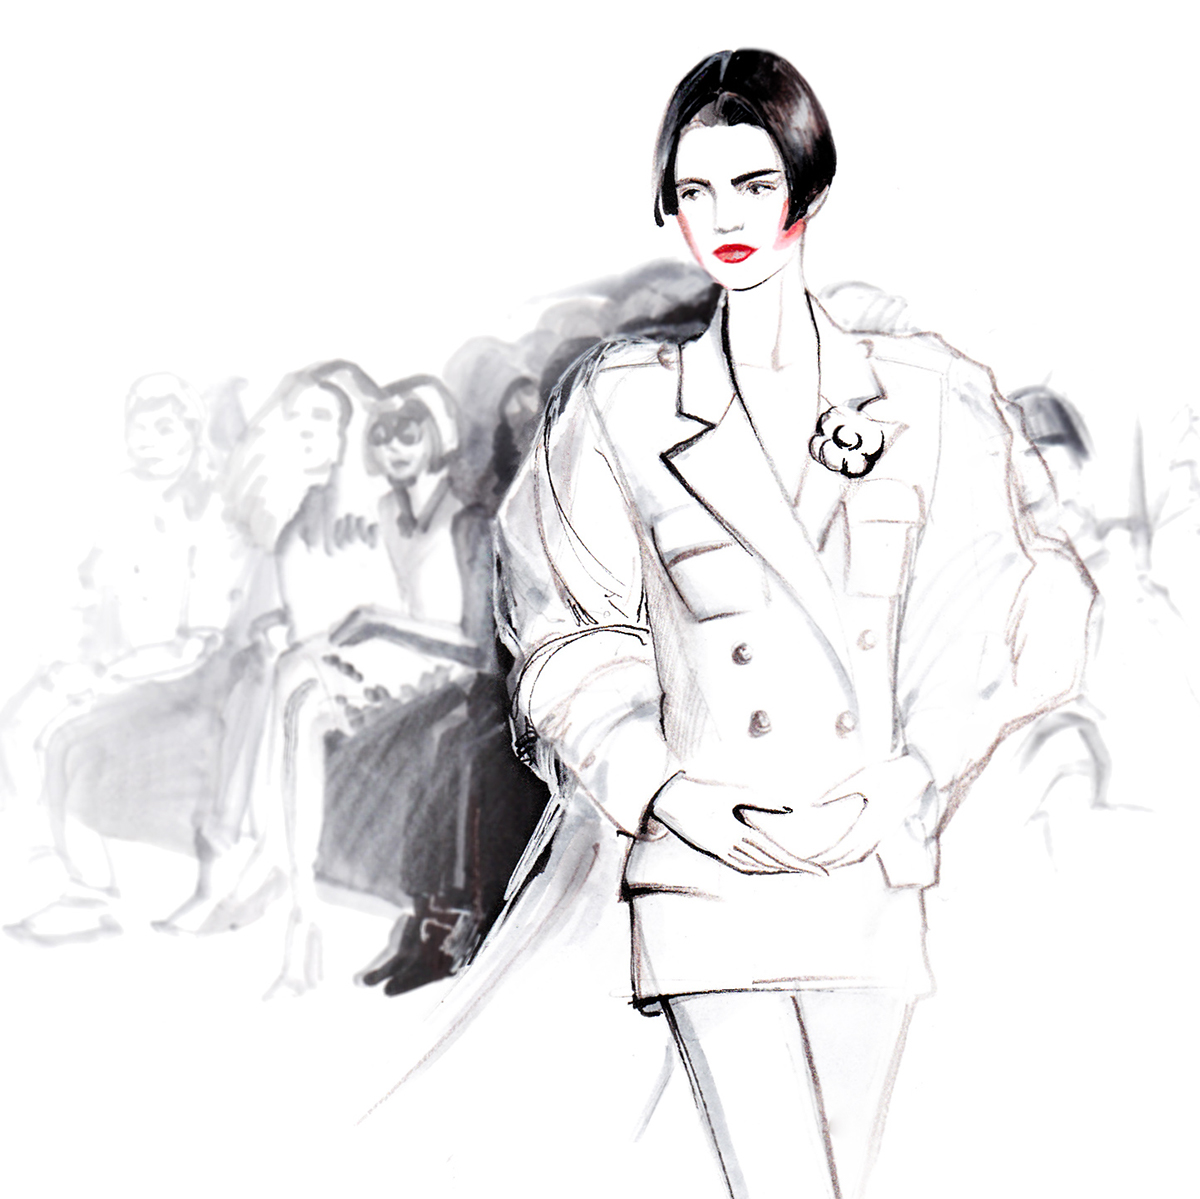 chanel kendall jenner kardashian Haute couture Paris france fall 2015 fashion illustration Fashion illustrator fashion design Fashion Designer karl lagerfeld model Beautiful Style